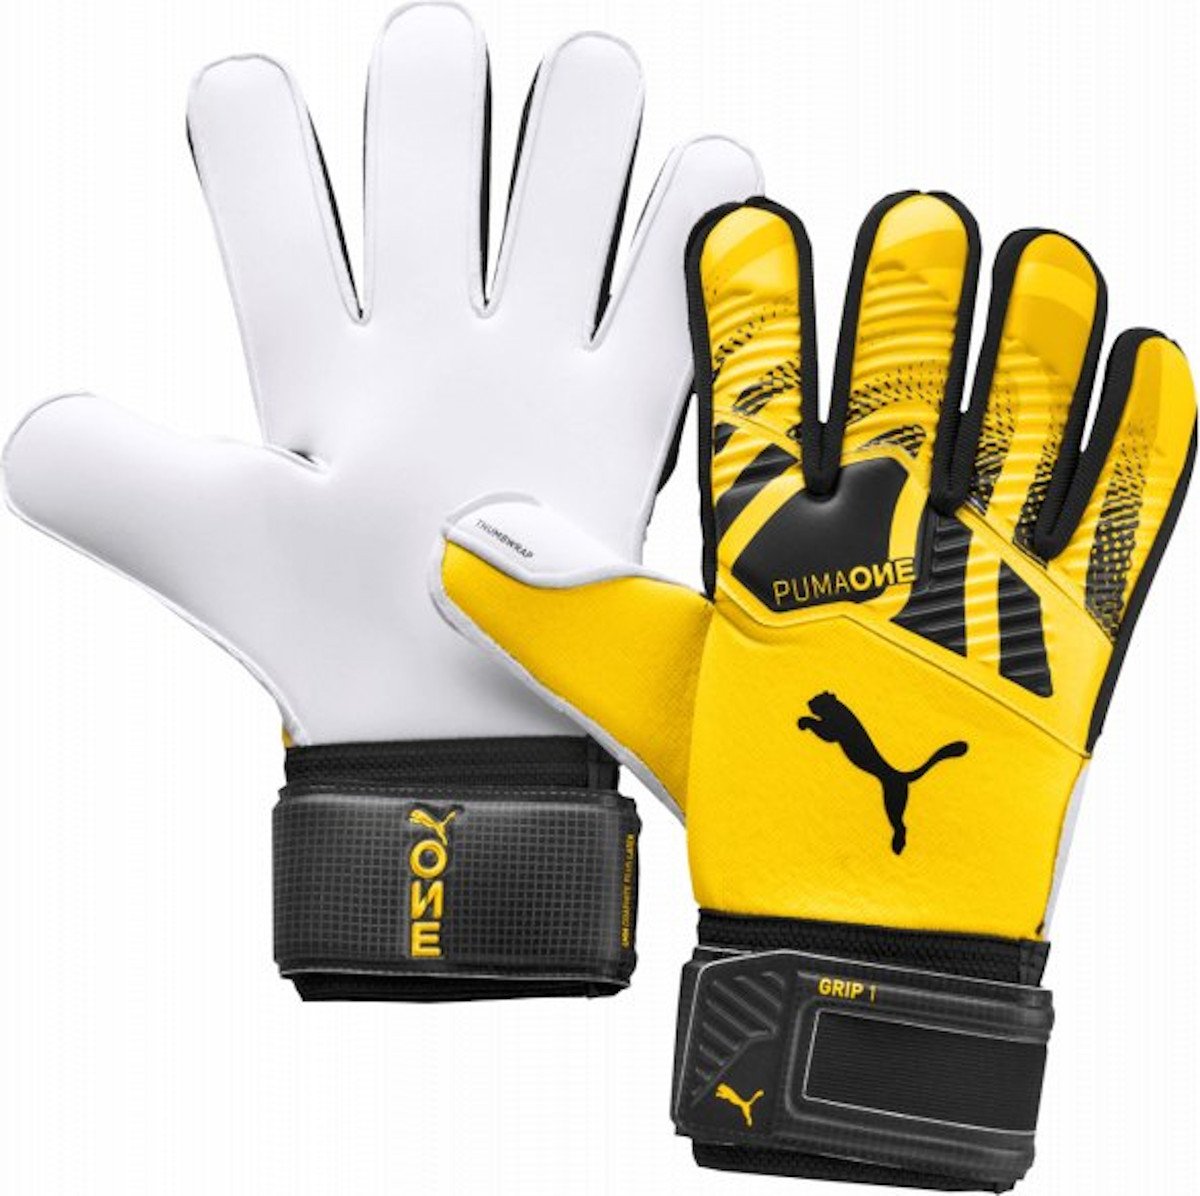 Goalkeeper's gloves Puma One Grip 1 RC TW GG